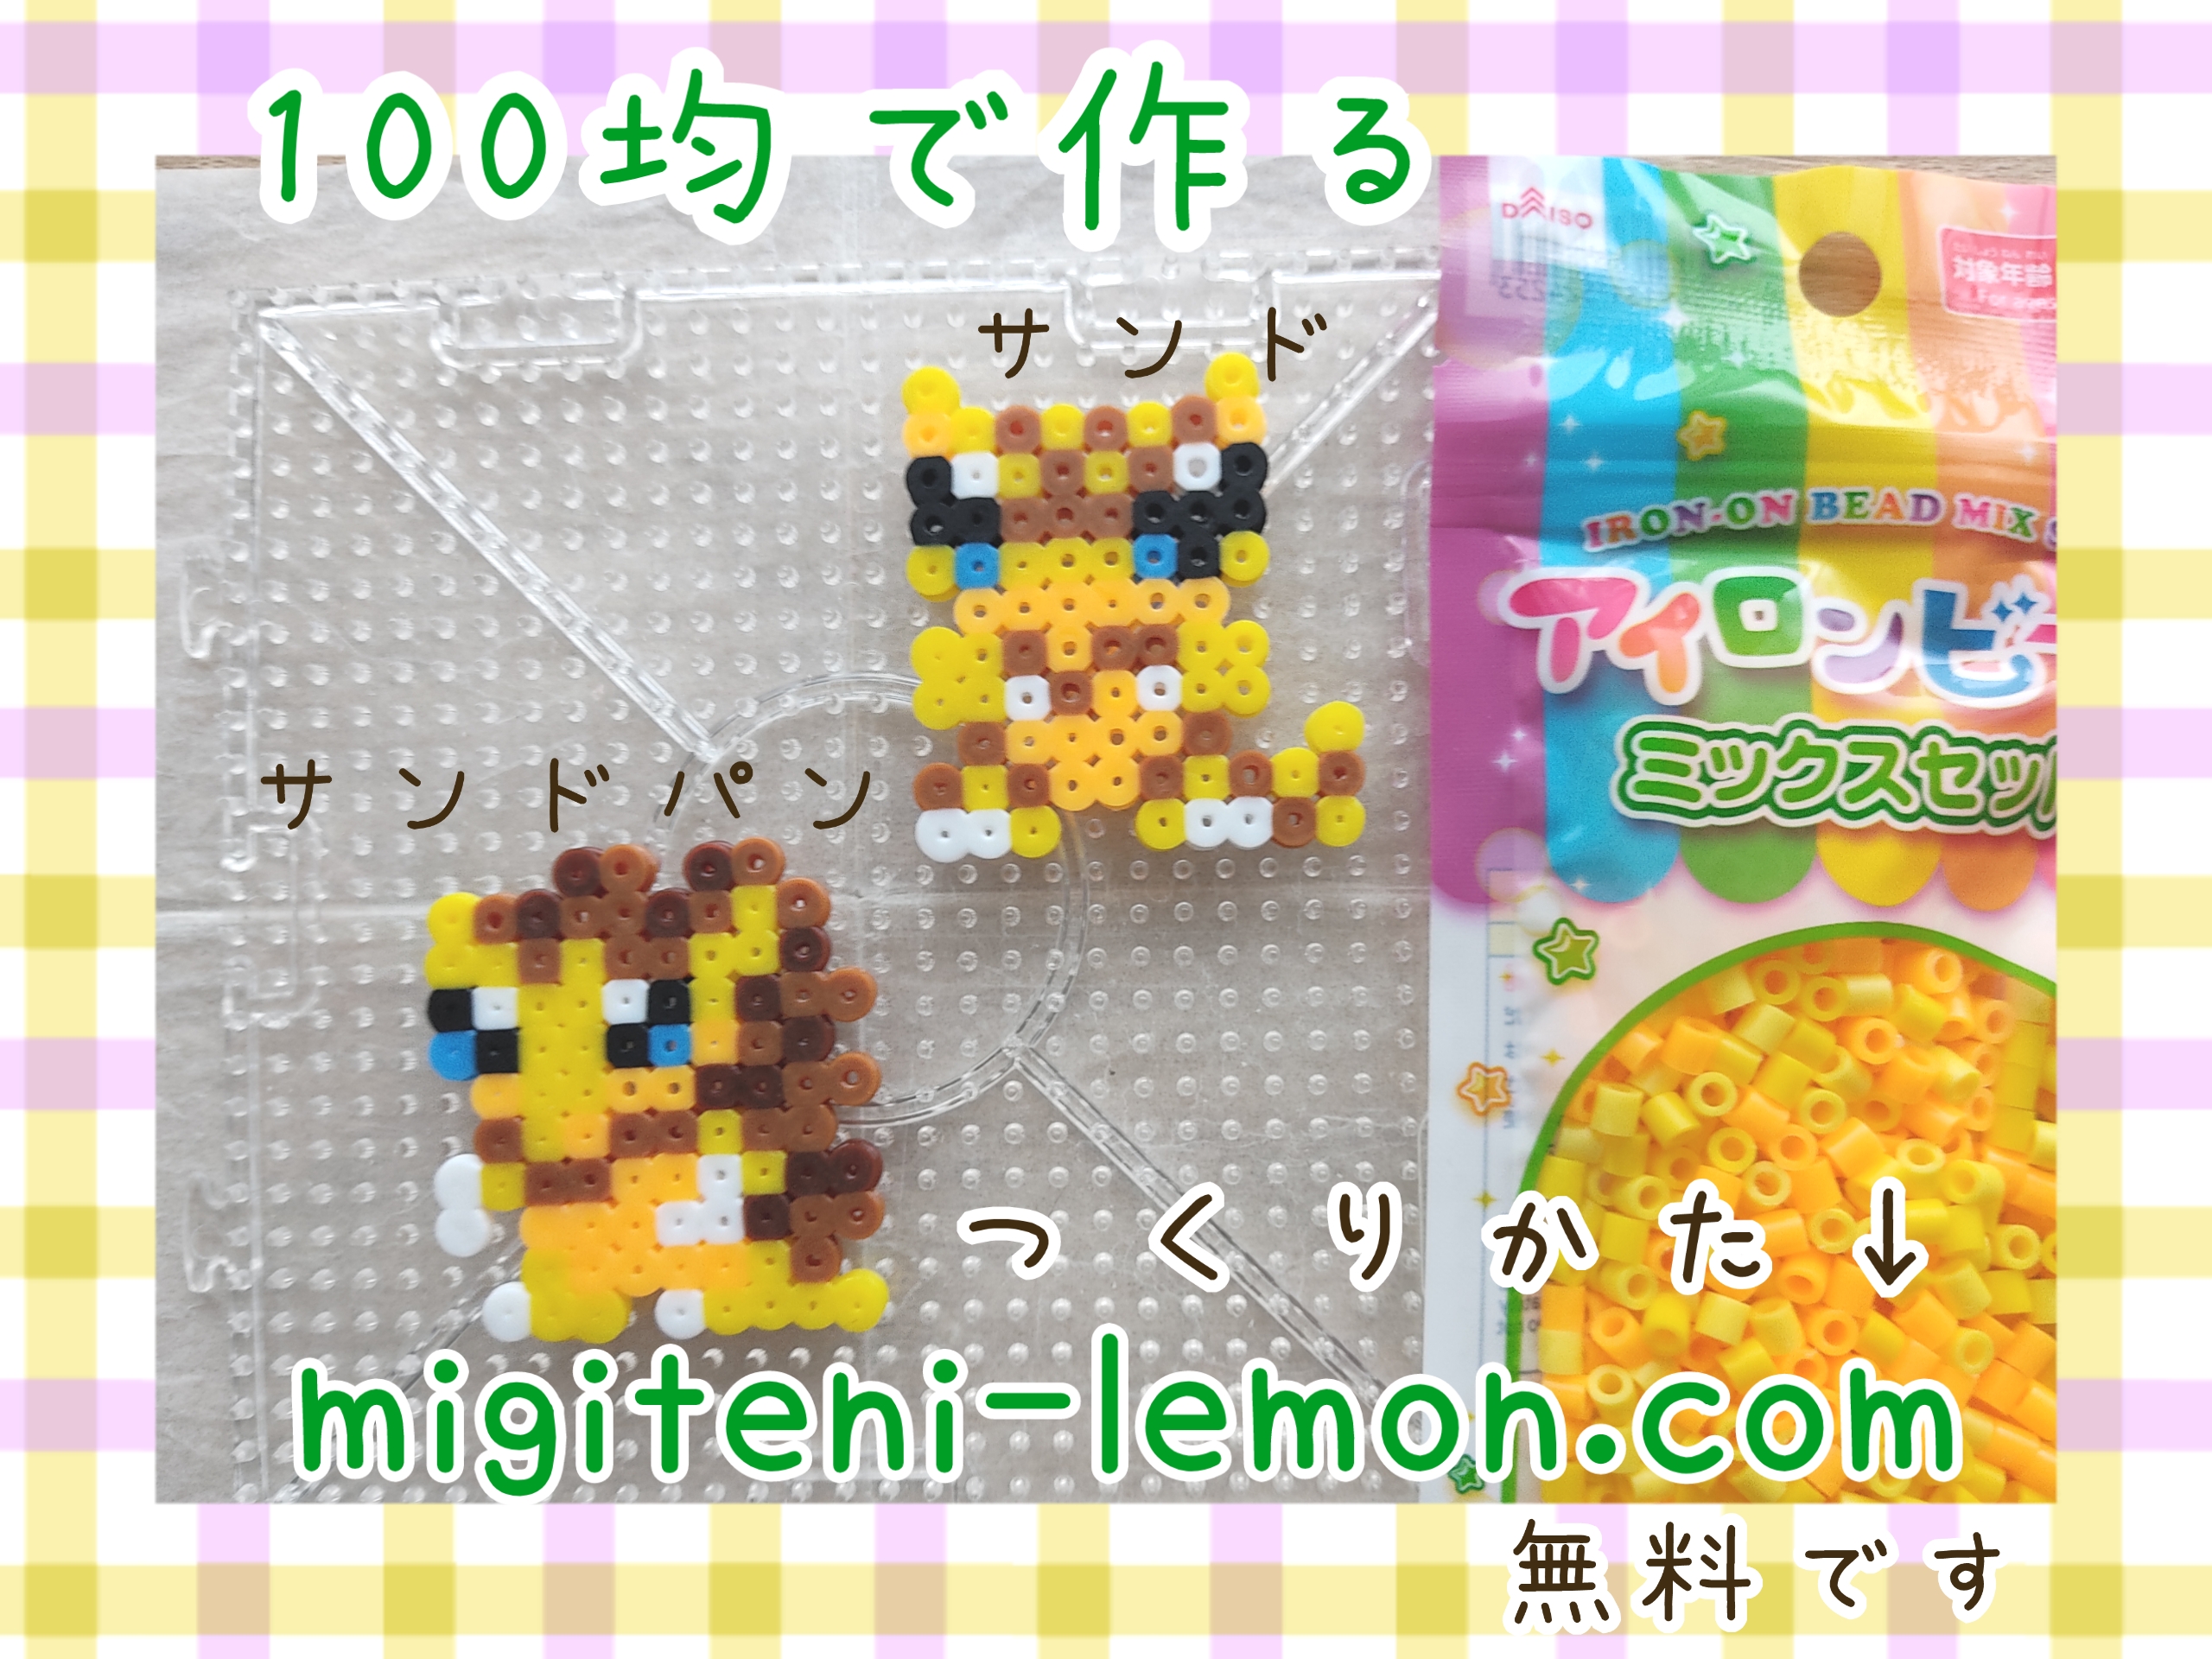 sand-sandshrew-sandpan-sandslash-kawaii-pokemon-iron-beads-free-zuan-daiso-yellow-aromajiro-small-square